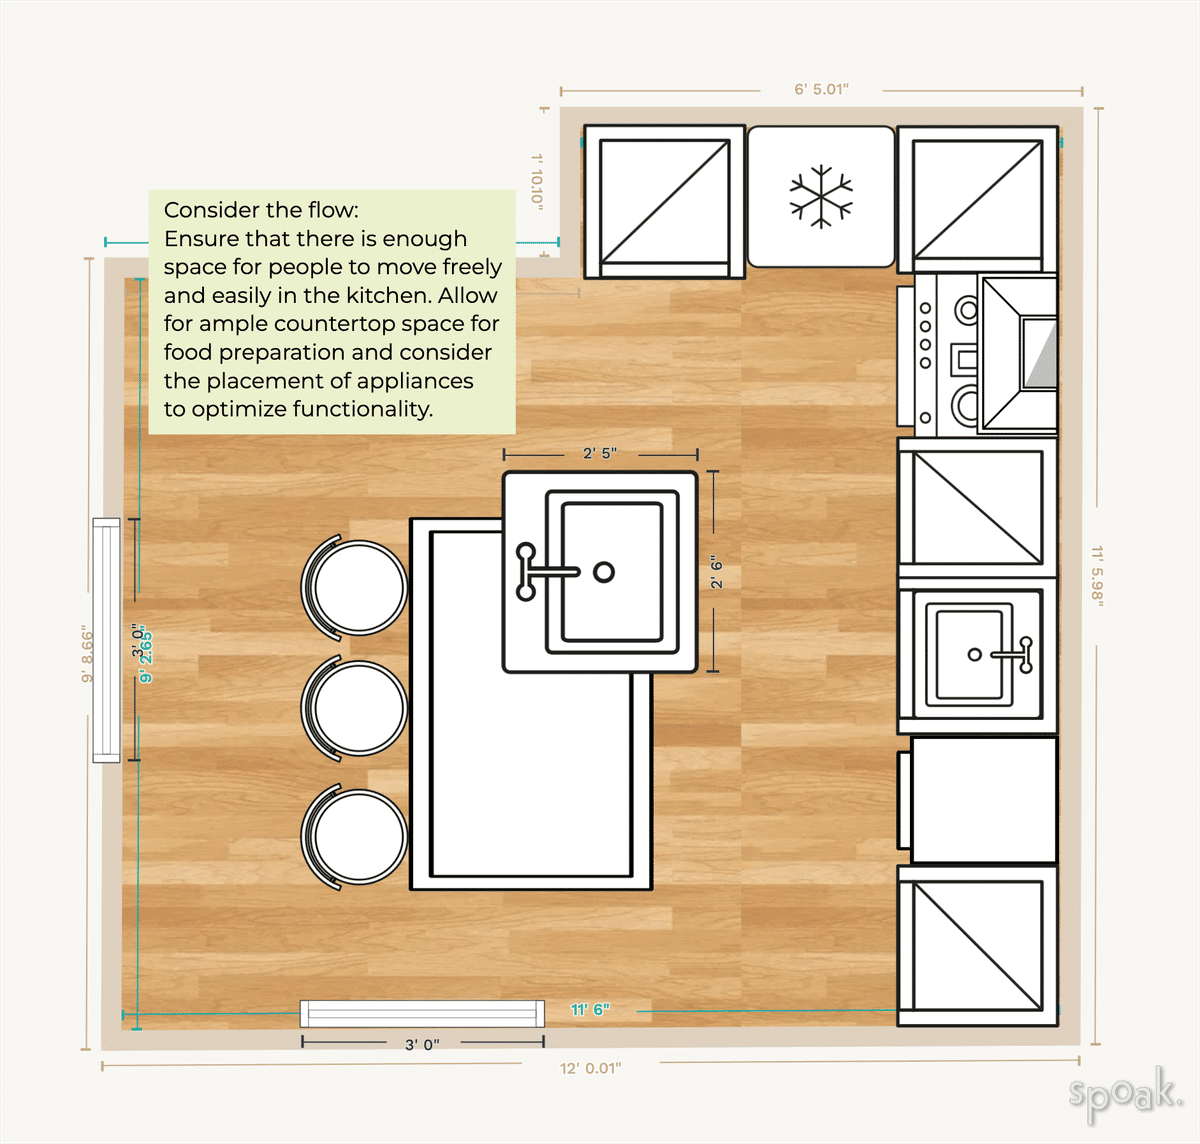 Kitchen + Living Room Layout designed by Christina Richard